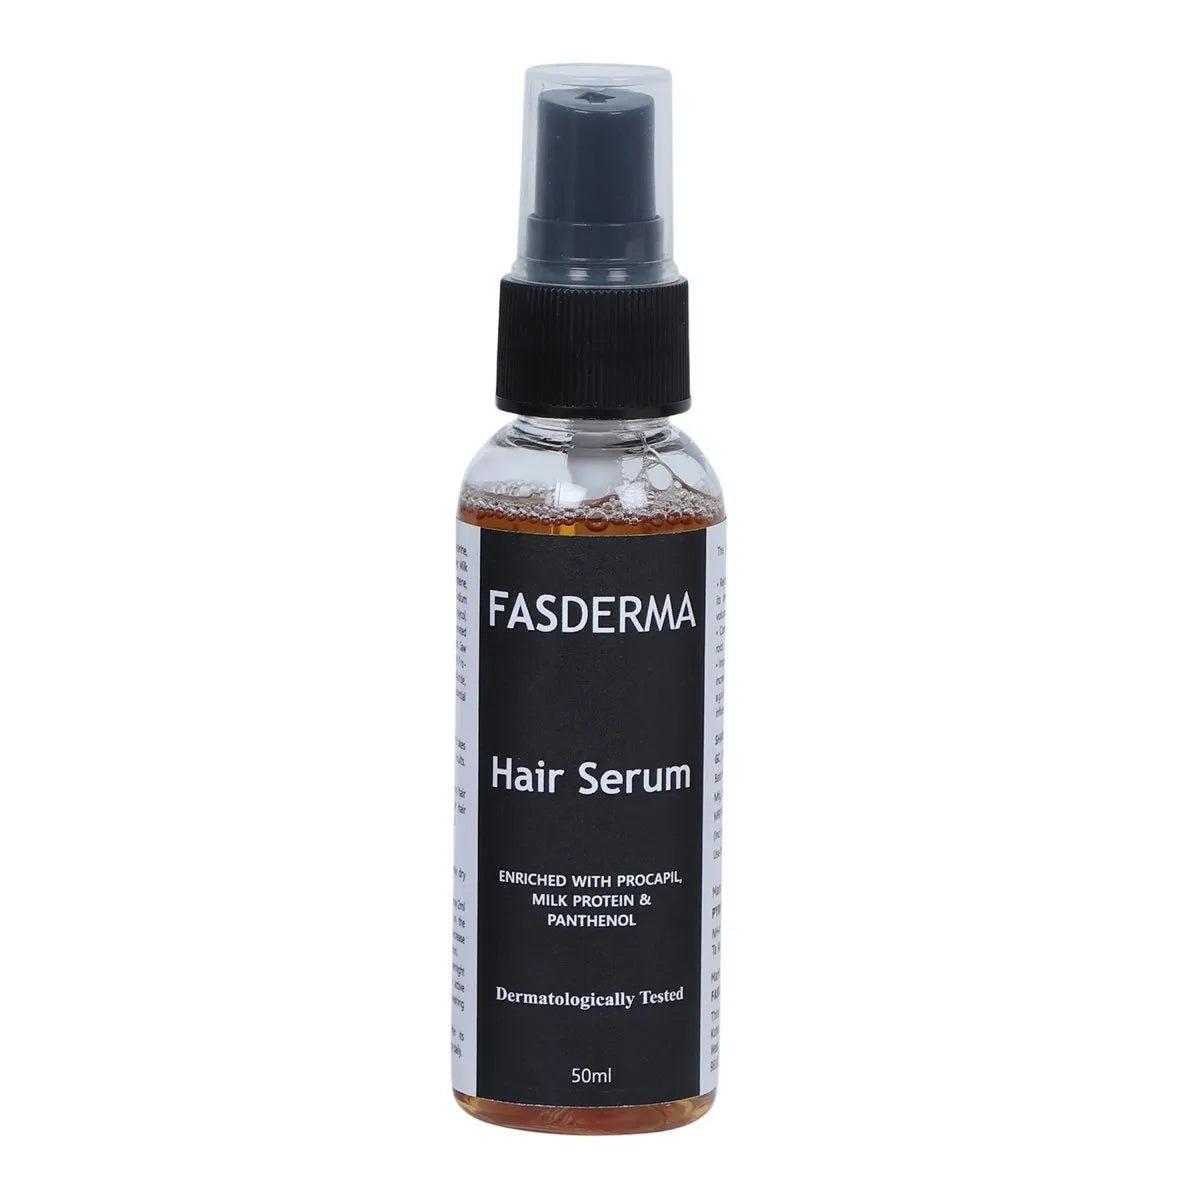 Fasderma Hair Serum, 50ml - Fasderma India